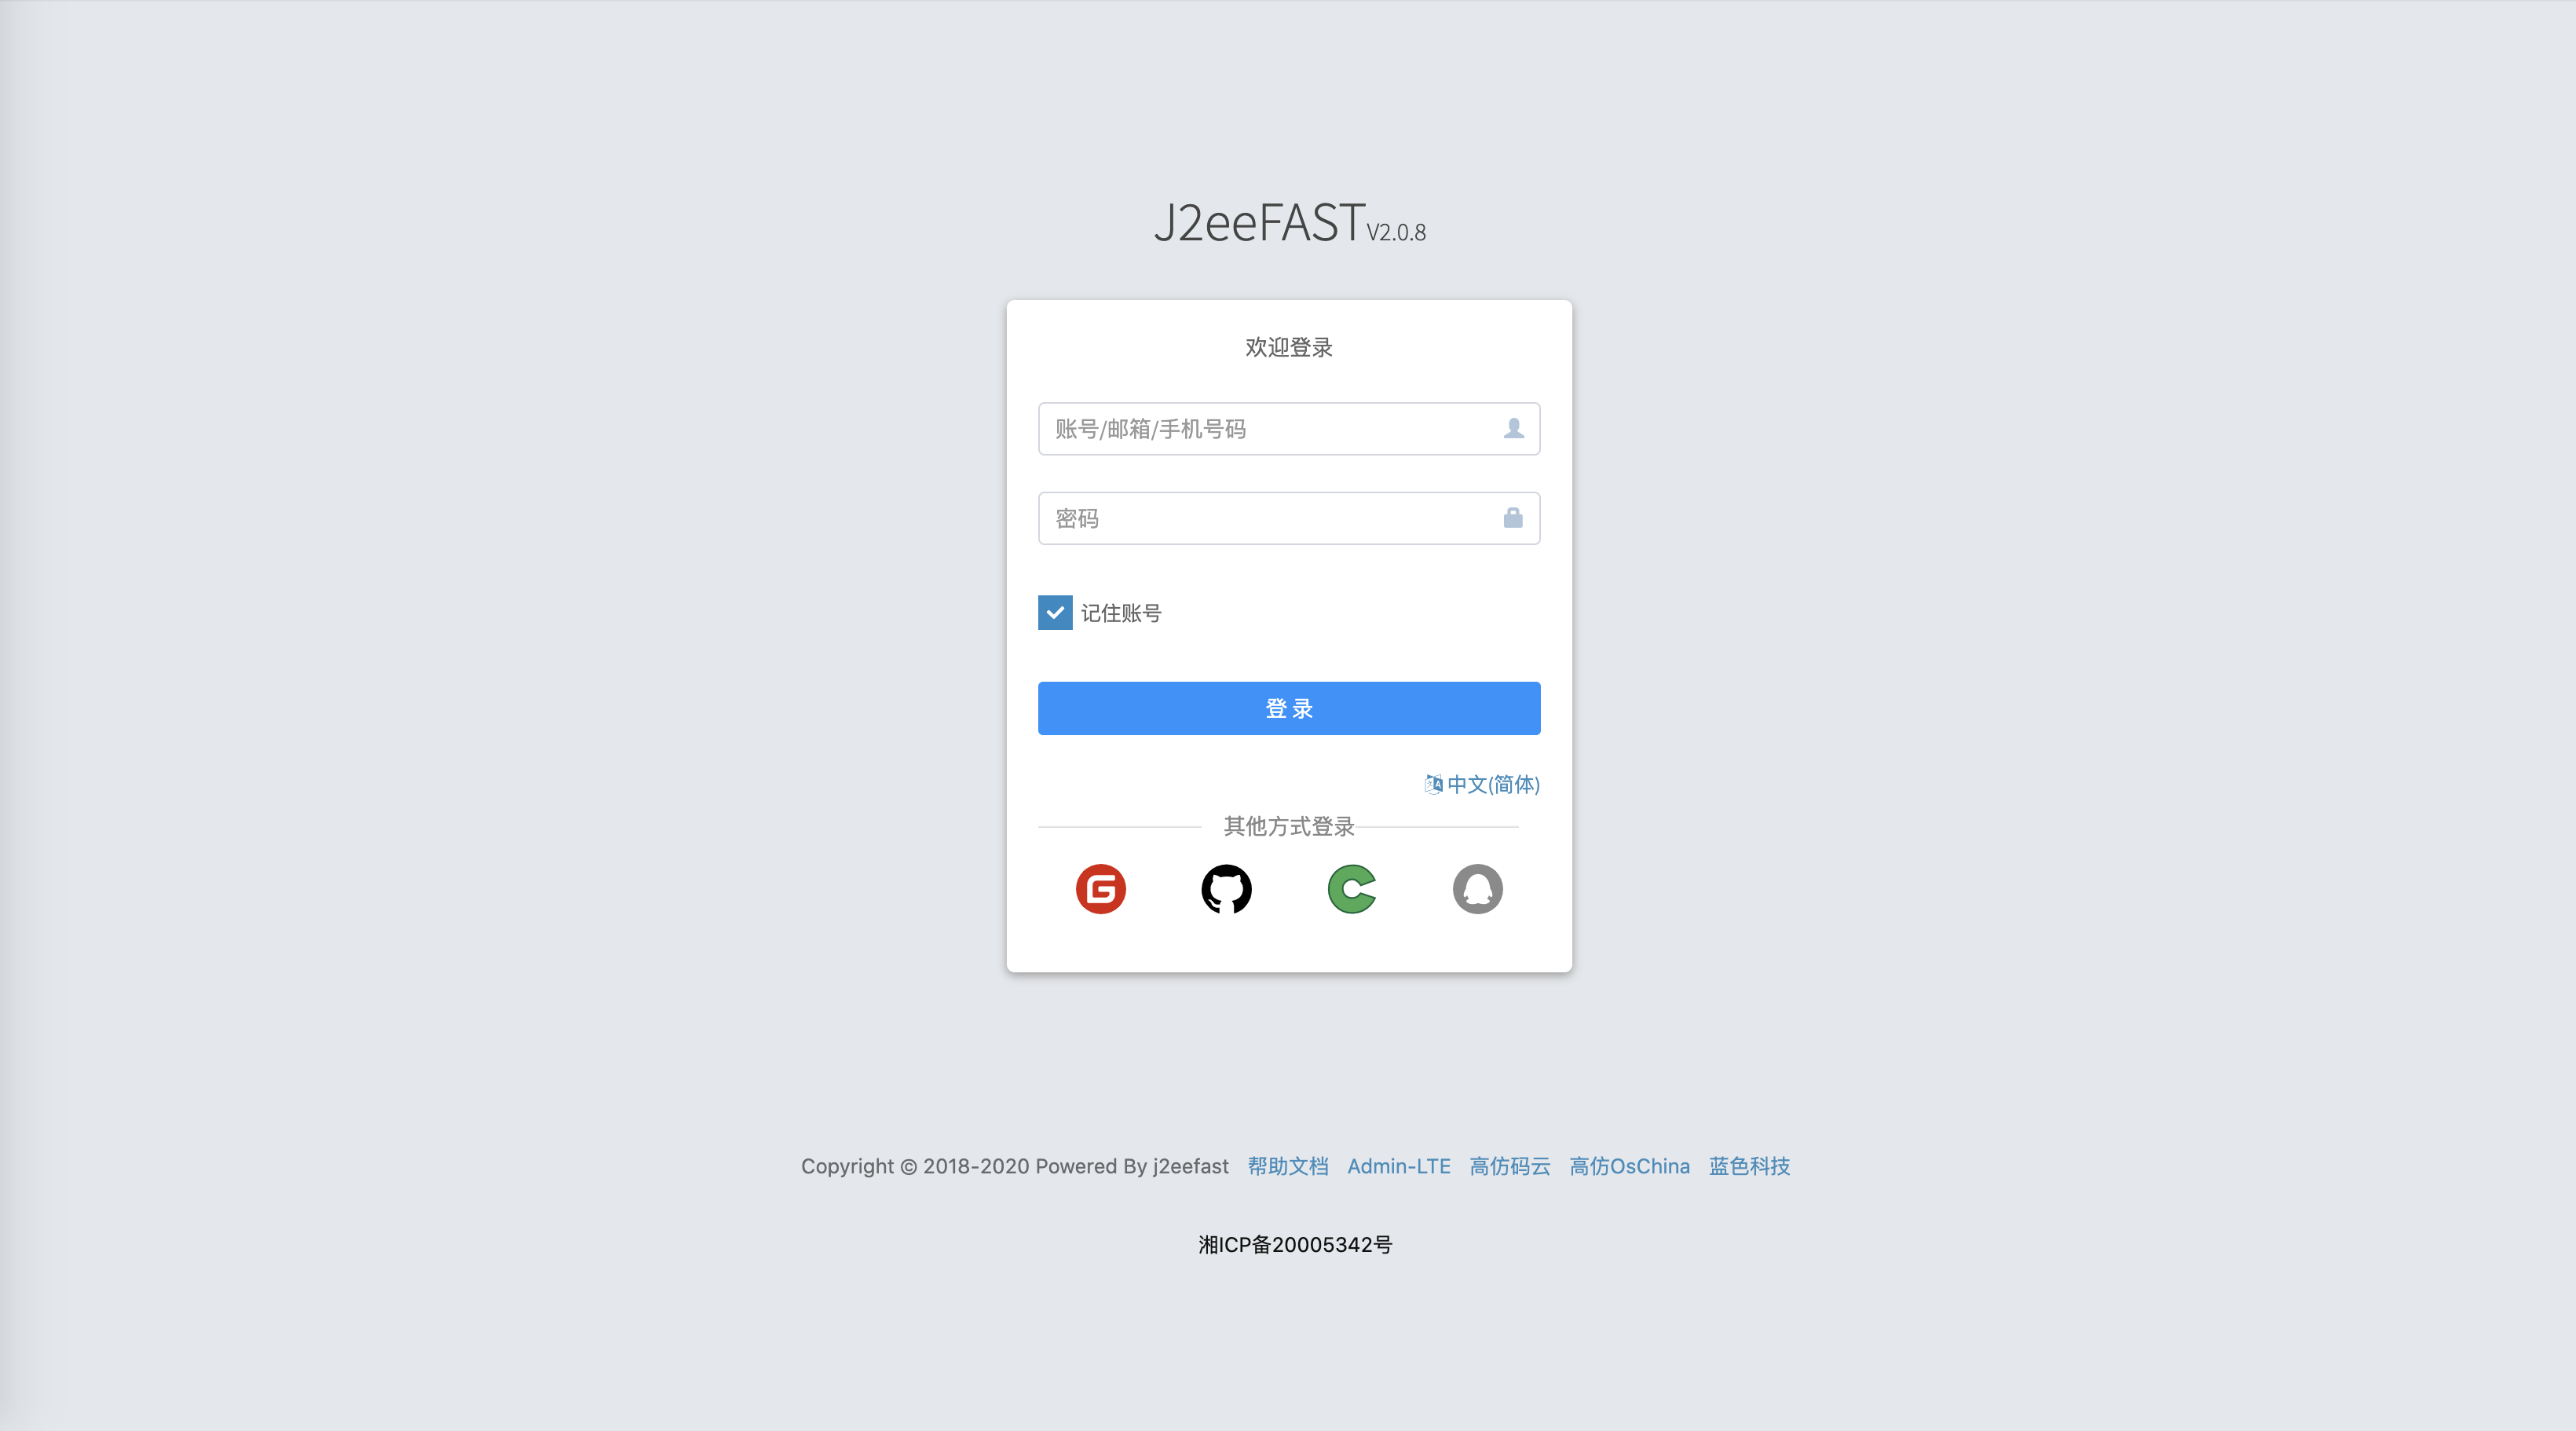 J2eeFAST 2.0.8 版本发布